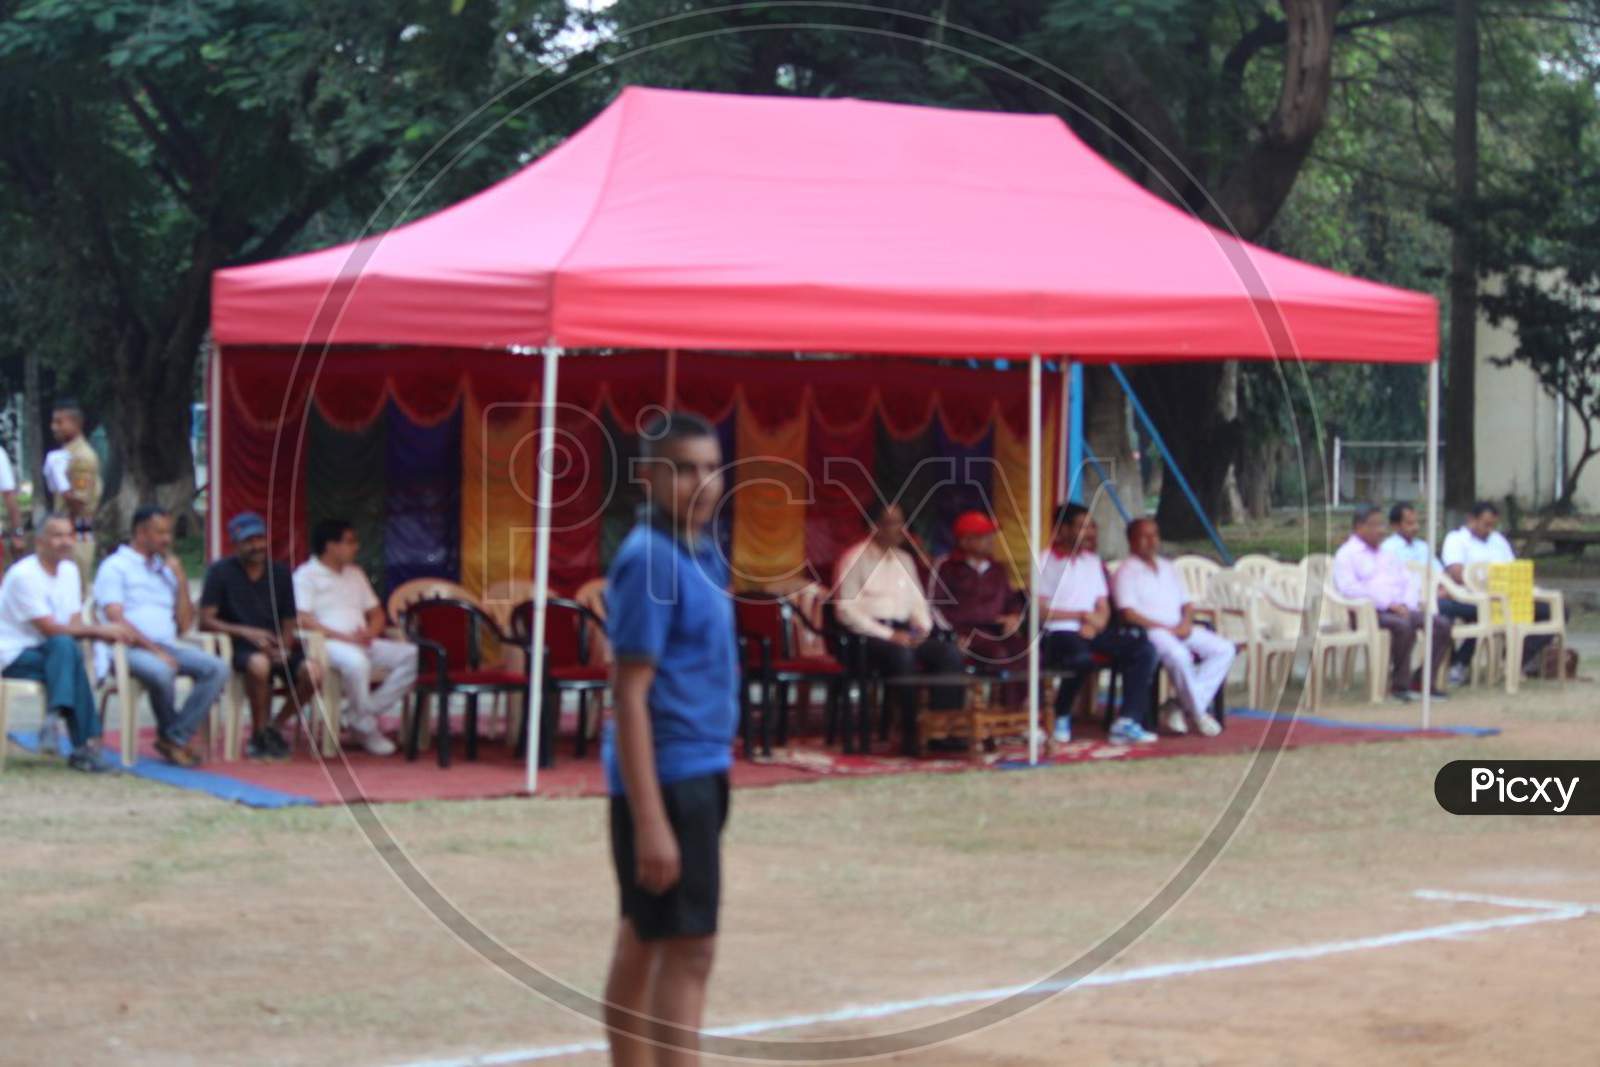 Volleyball and basketball competitions at Rashtriya military school, Bangalore